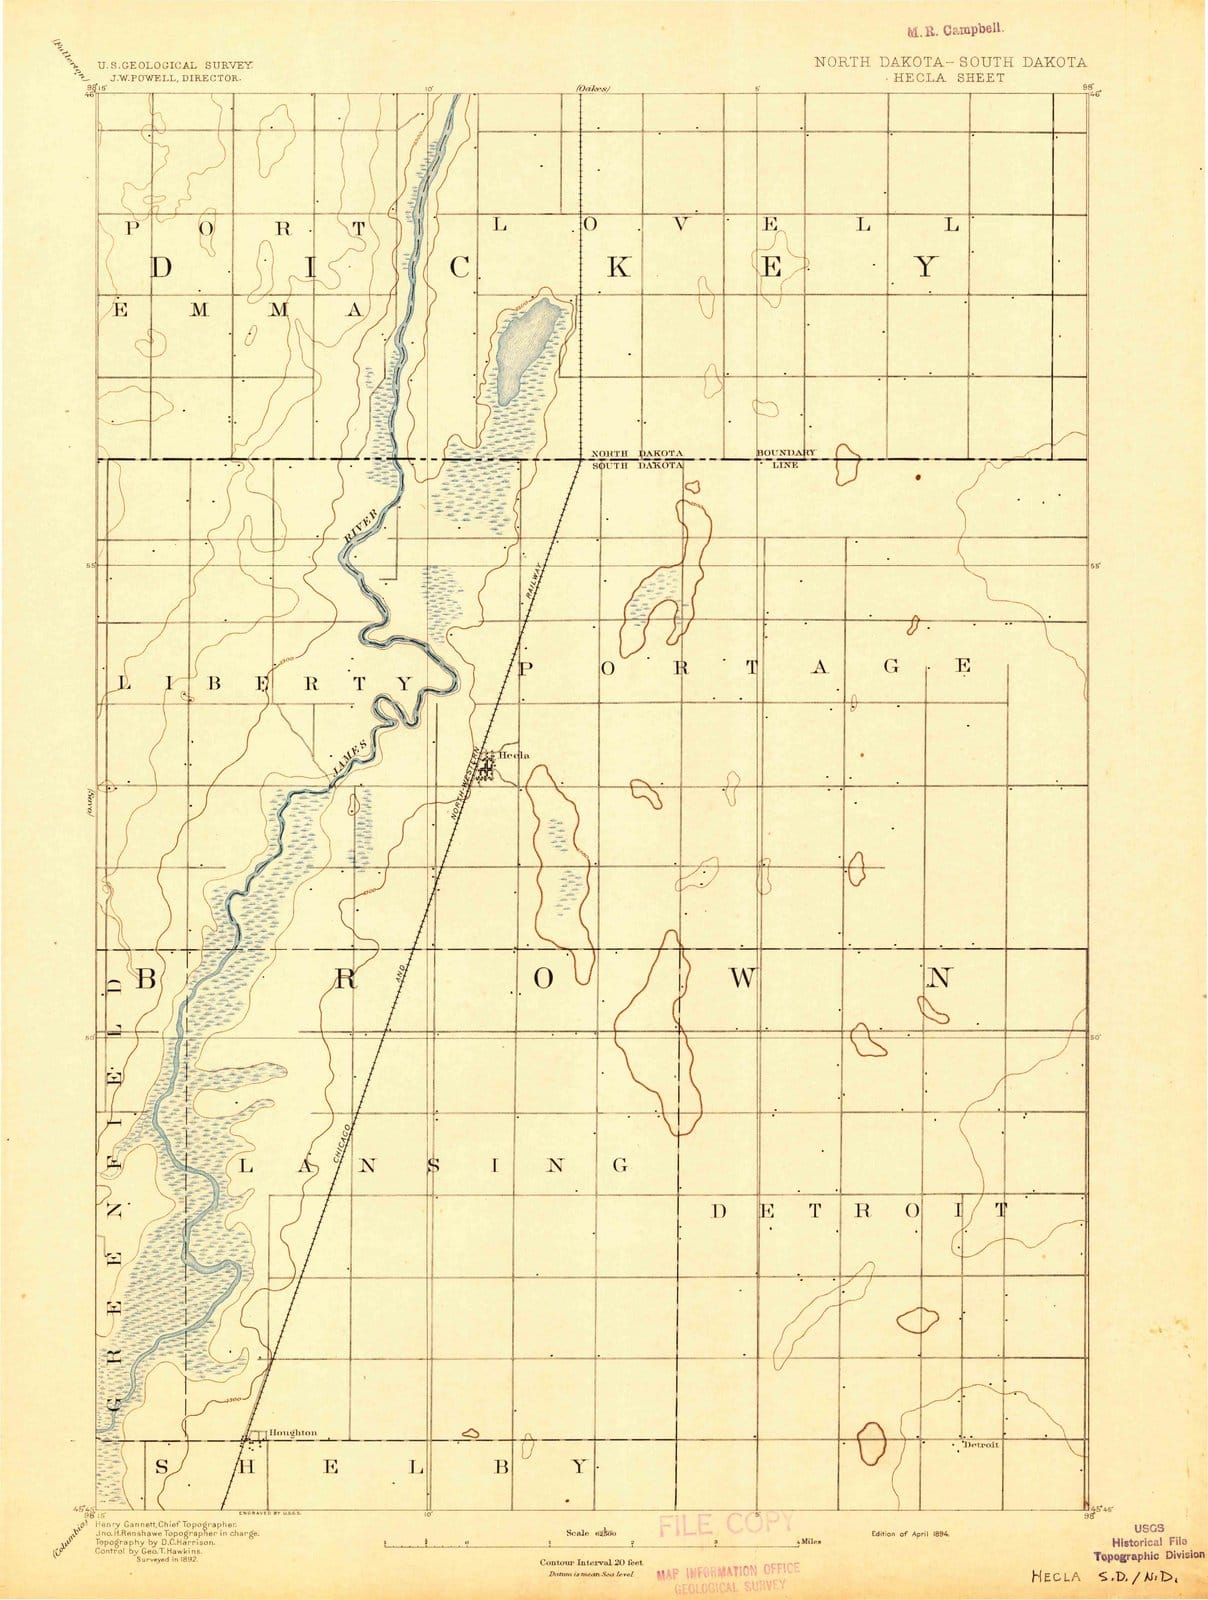 1894 Hecla, SD - South Dakota - USGS Topographic Map